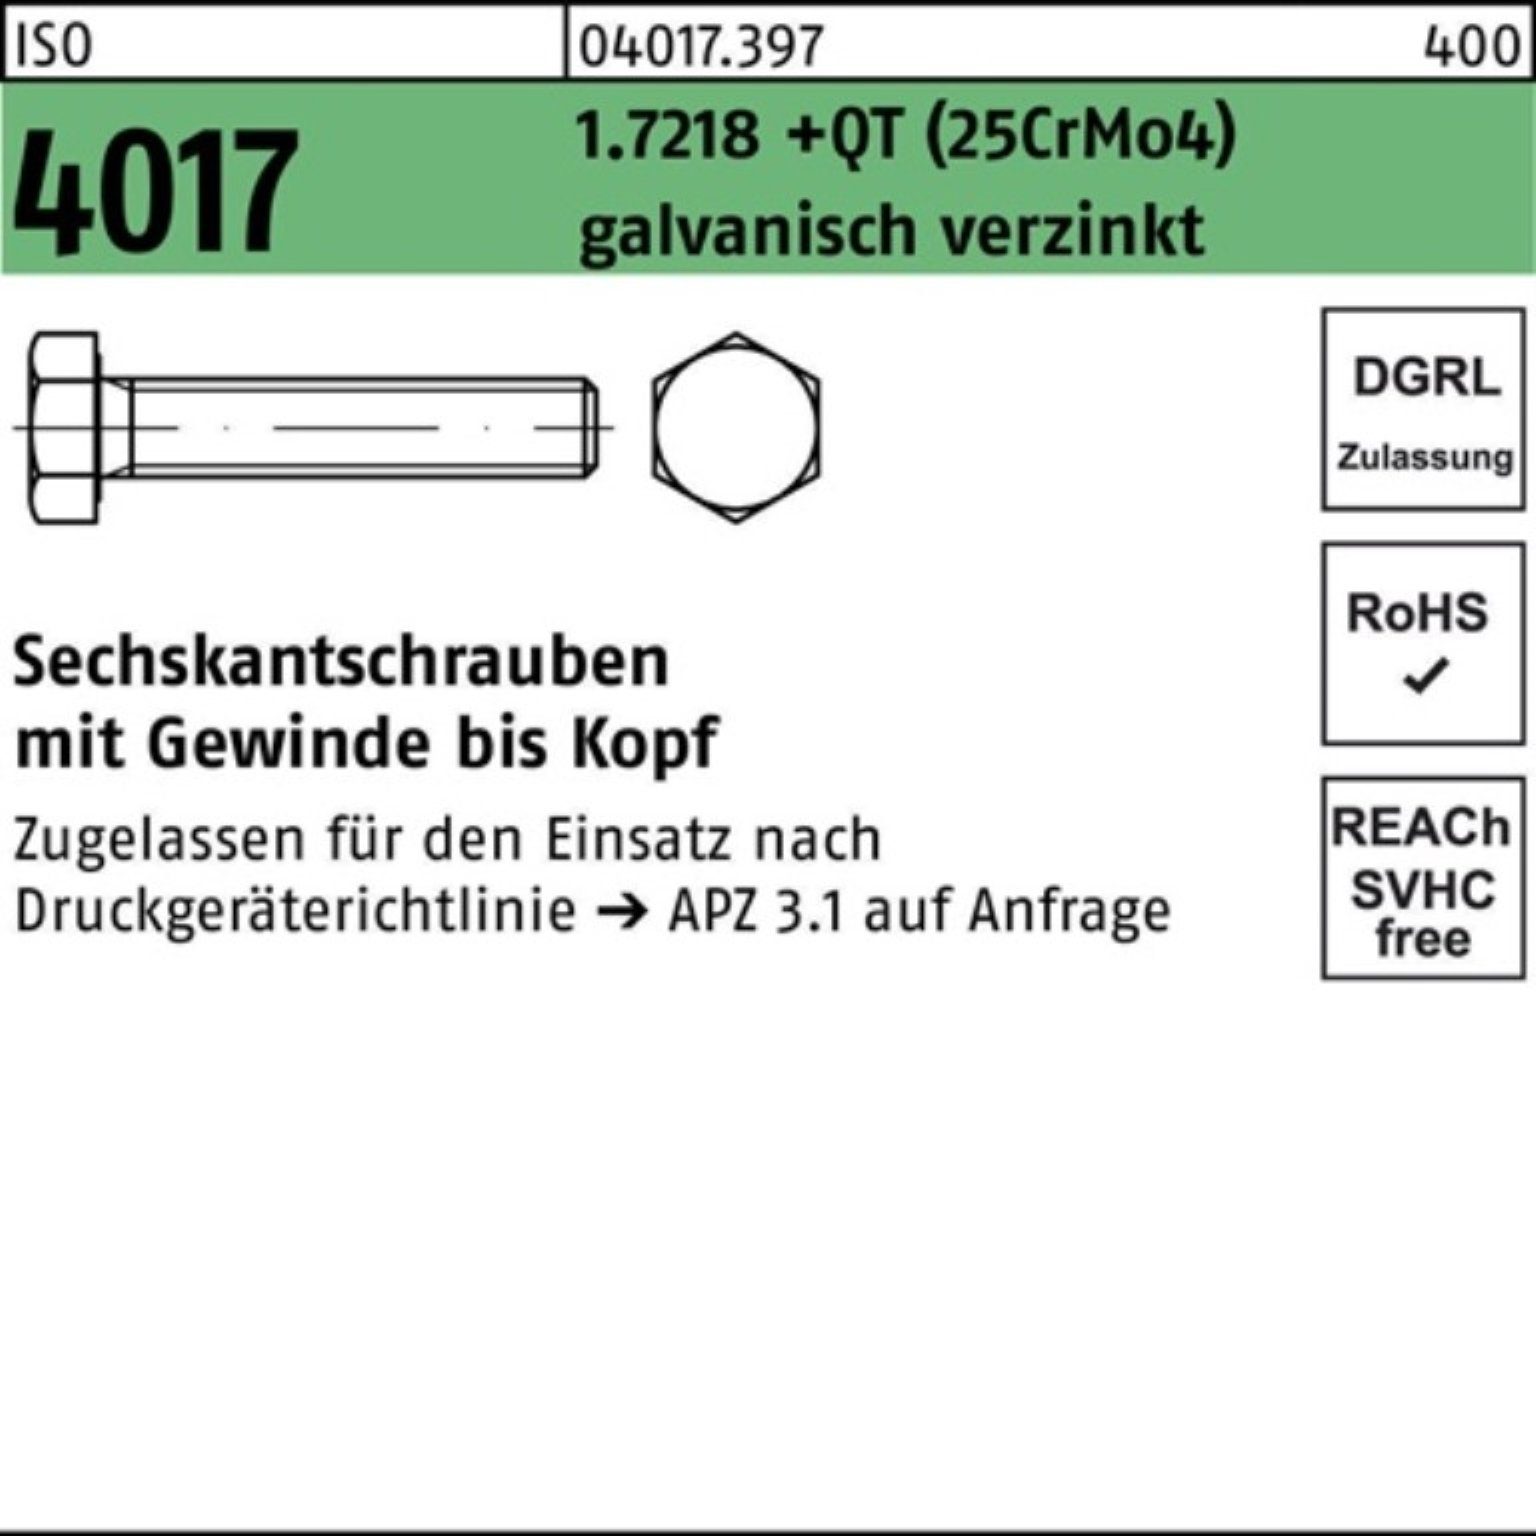 Bufab Sechskantschraube (25CrMo4) Pack 1.7218 M27x110 VG Sechskantschraube ISO 4017 100er +QT